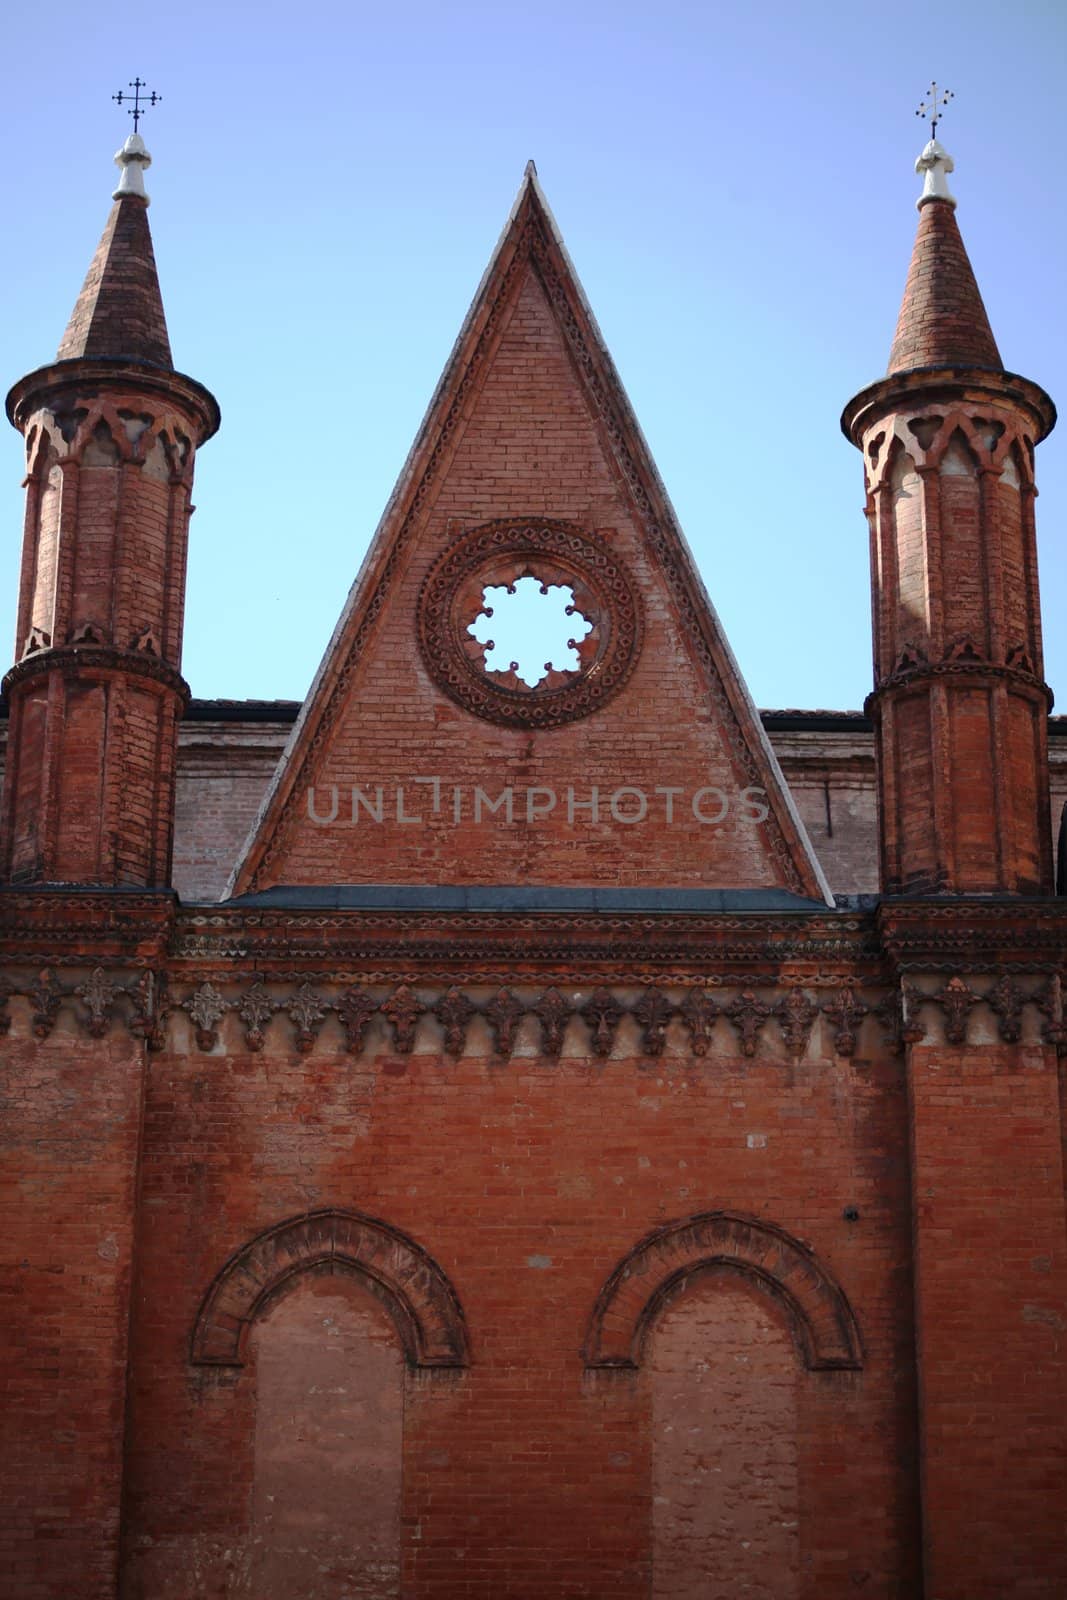 Church facade, details